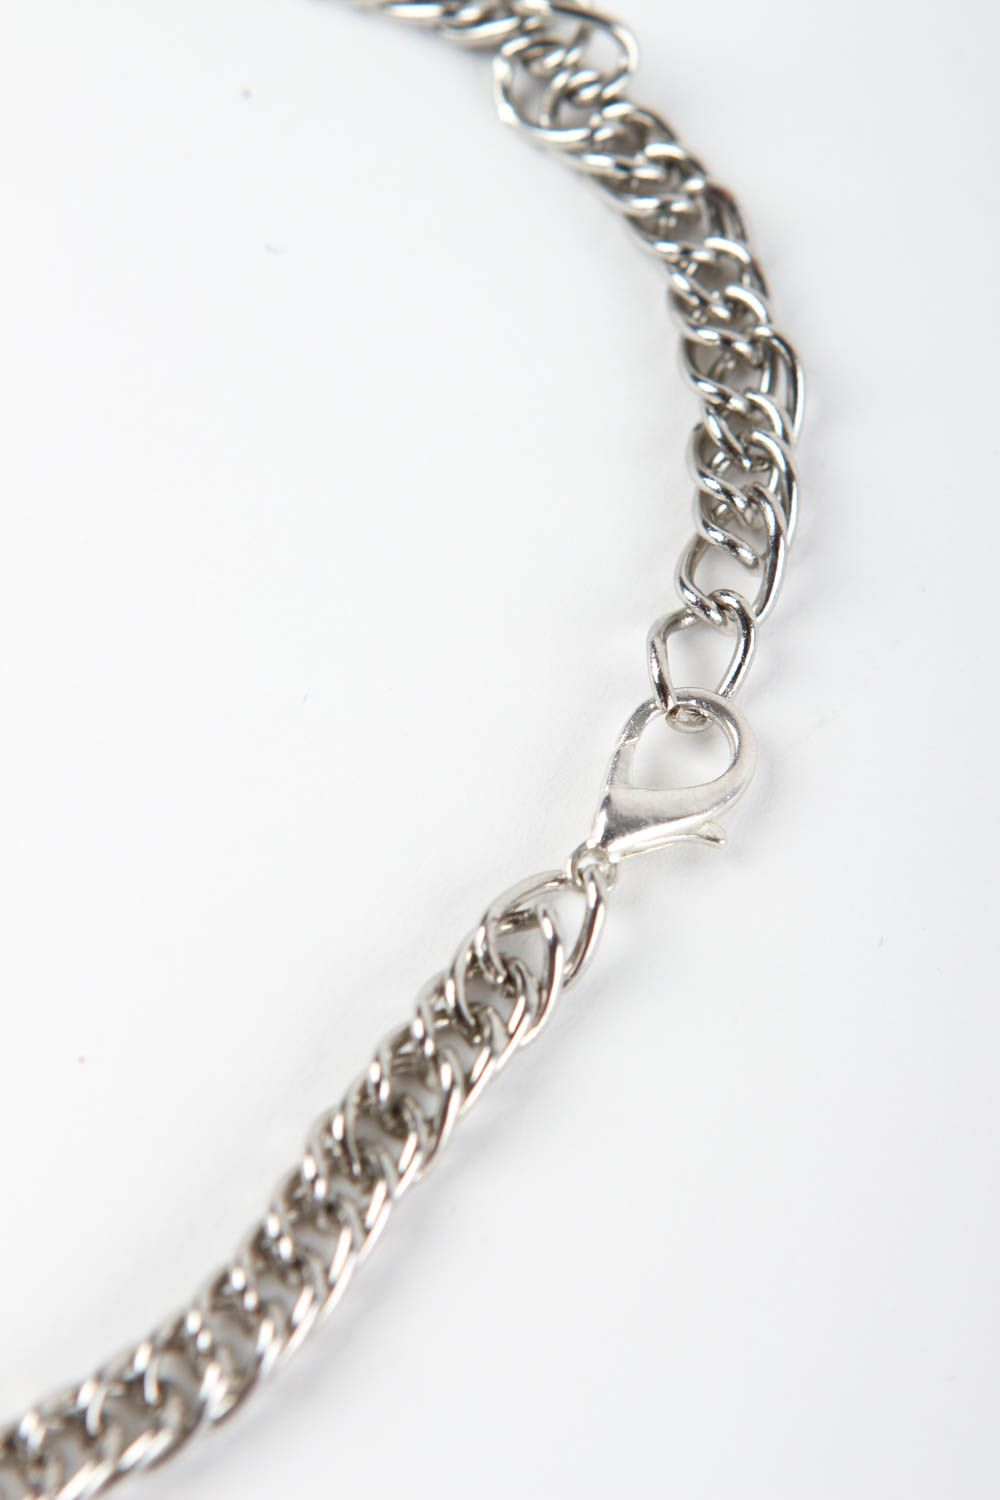 Unusual handmade metal pendant metal necklace designs accessories for girls photo 4